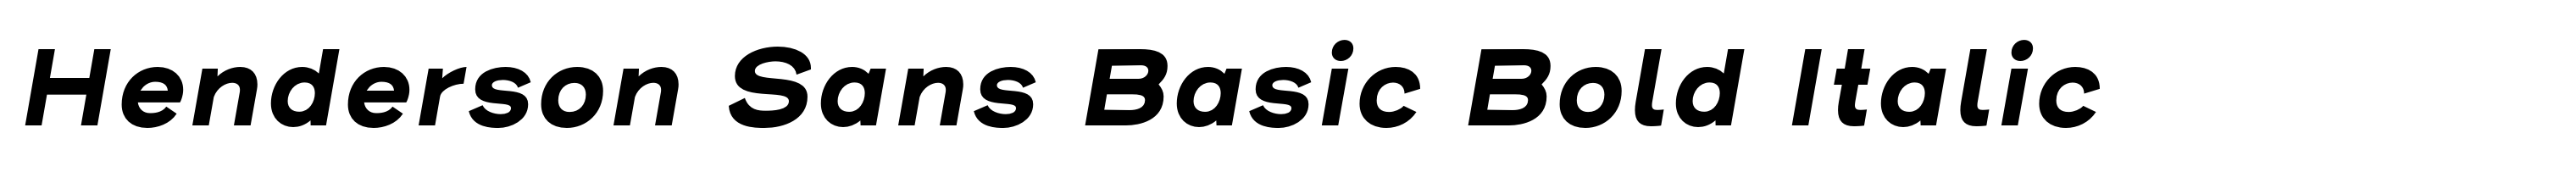 Henderson Sans Basic Bold Italic